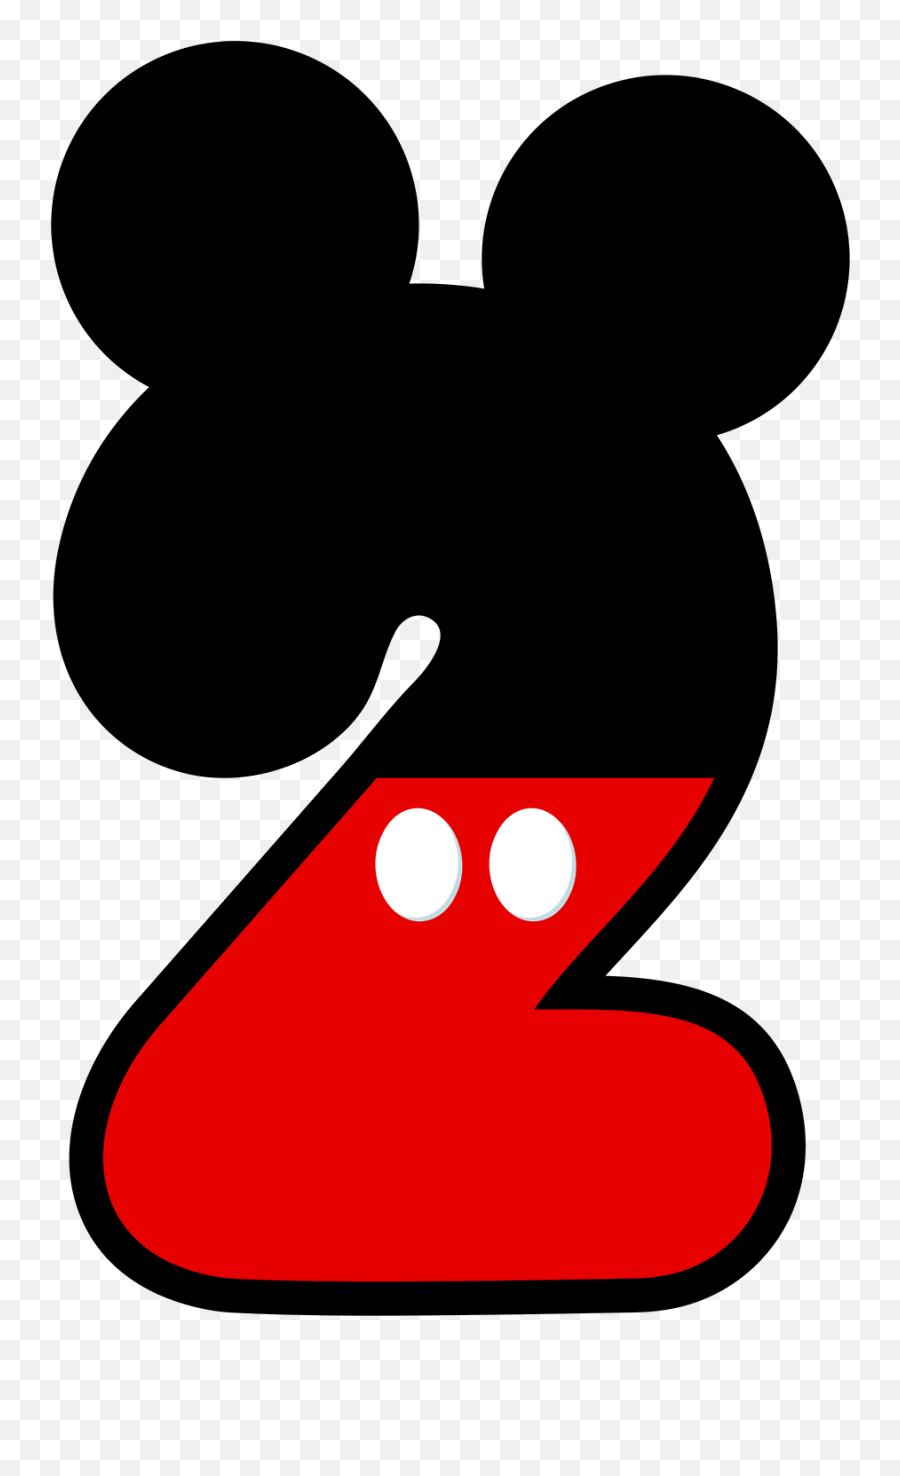 Malkatapoli - Profile Pinterest Numero 2 Mickey Png Emoji,Edible Emoji Cake Toppers